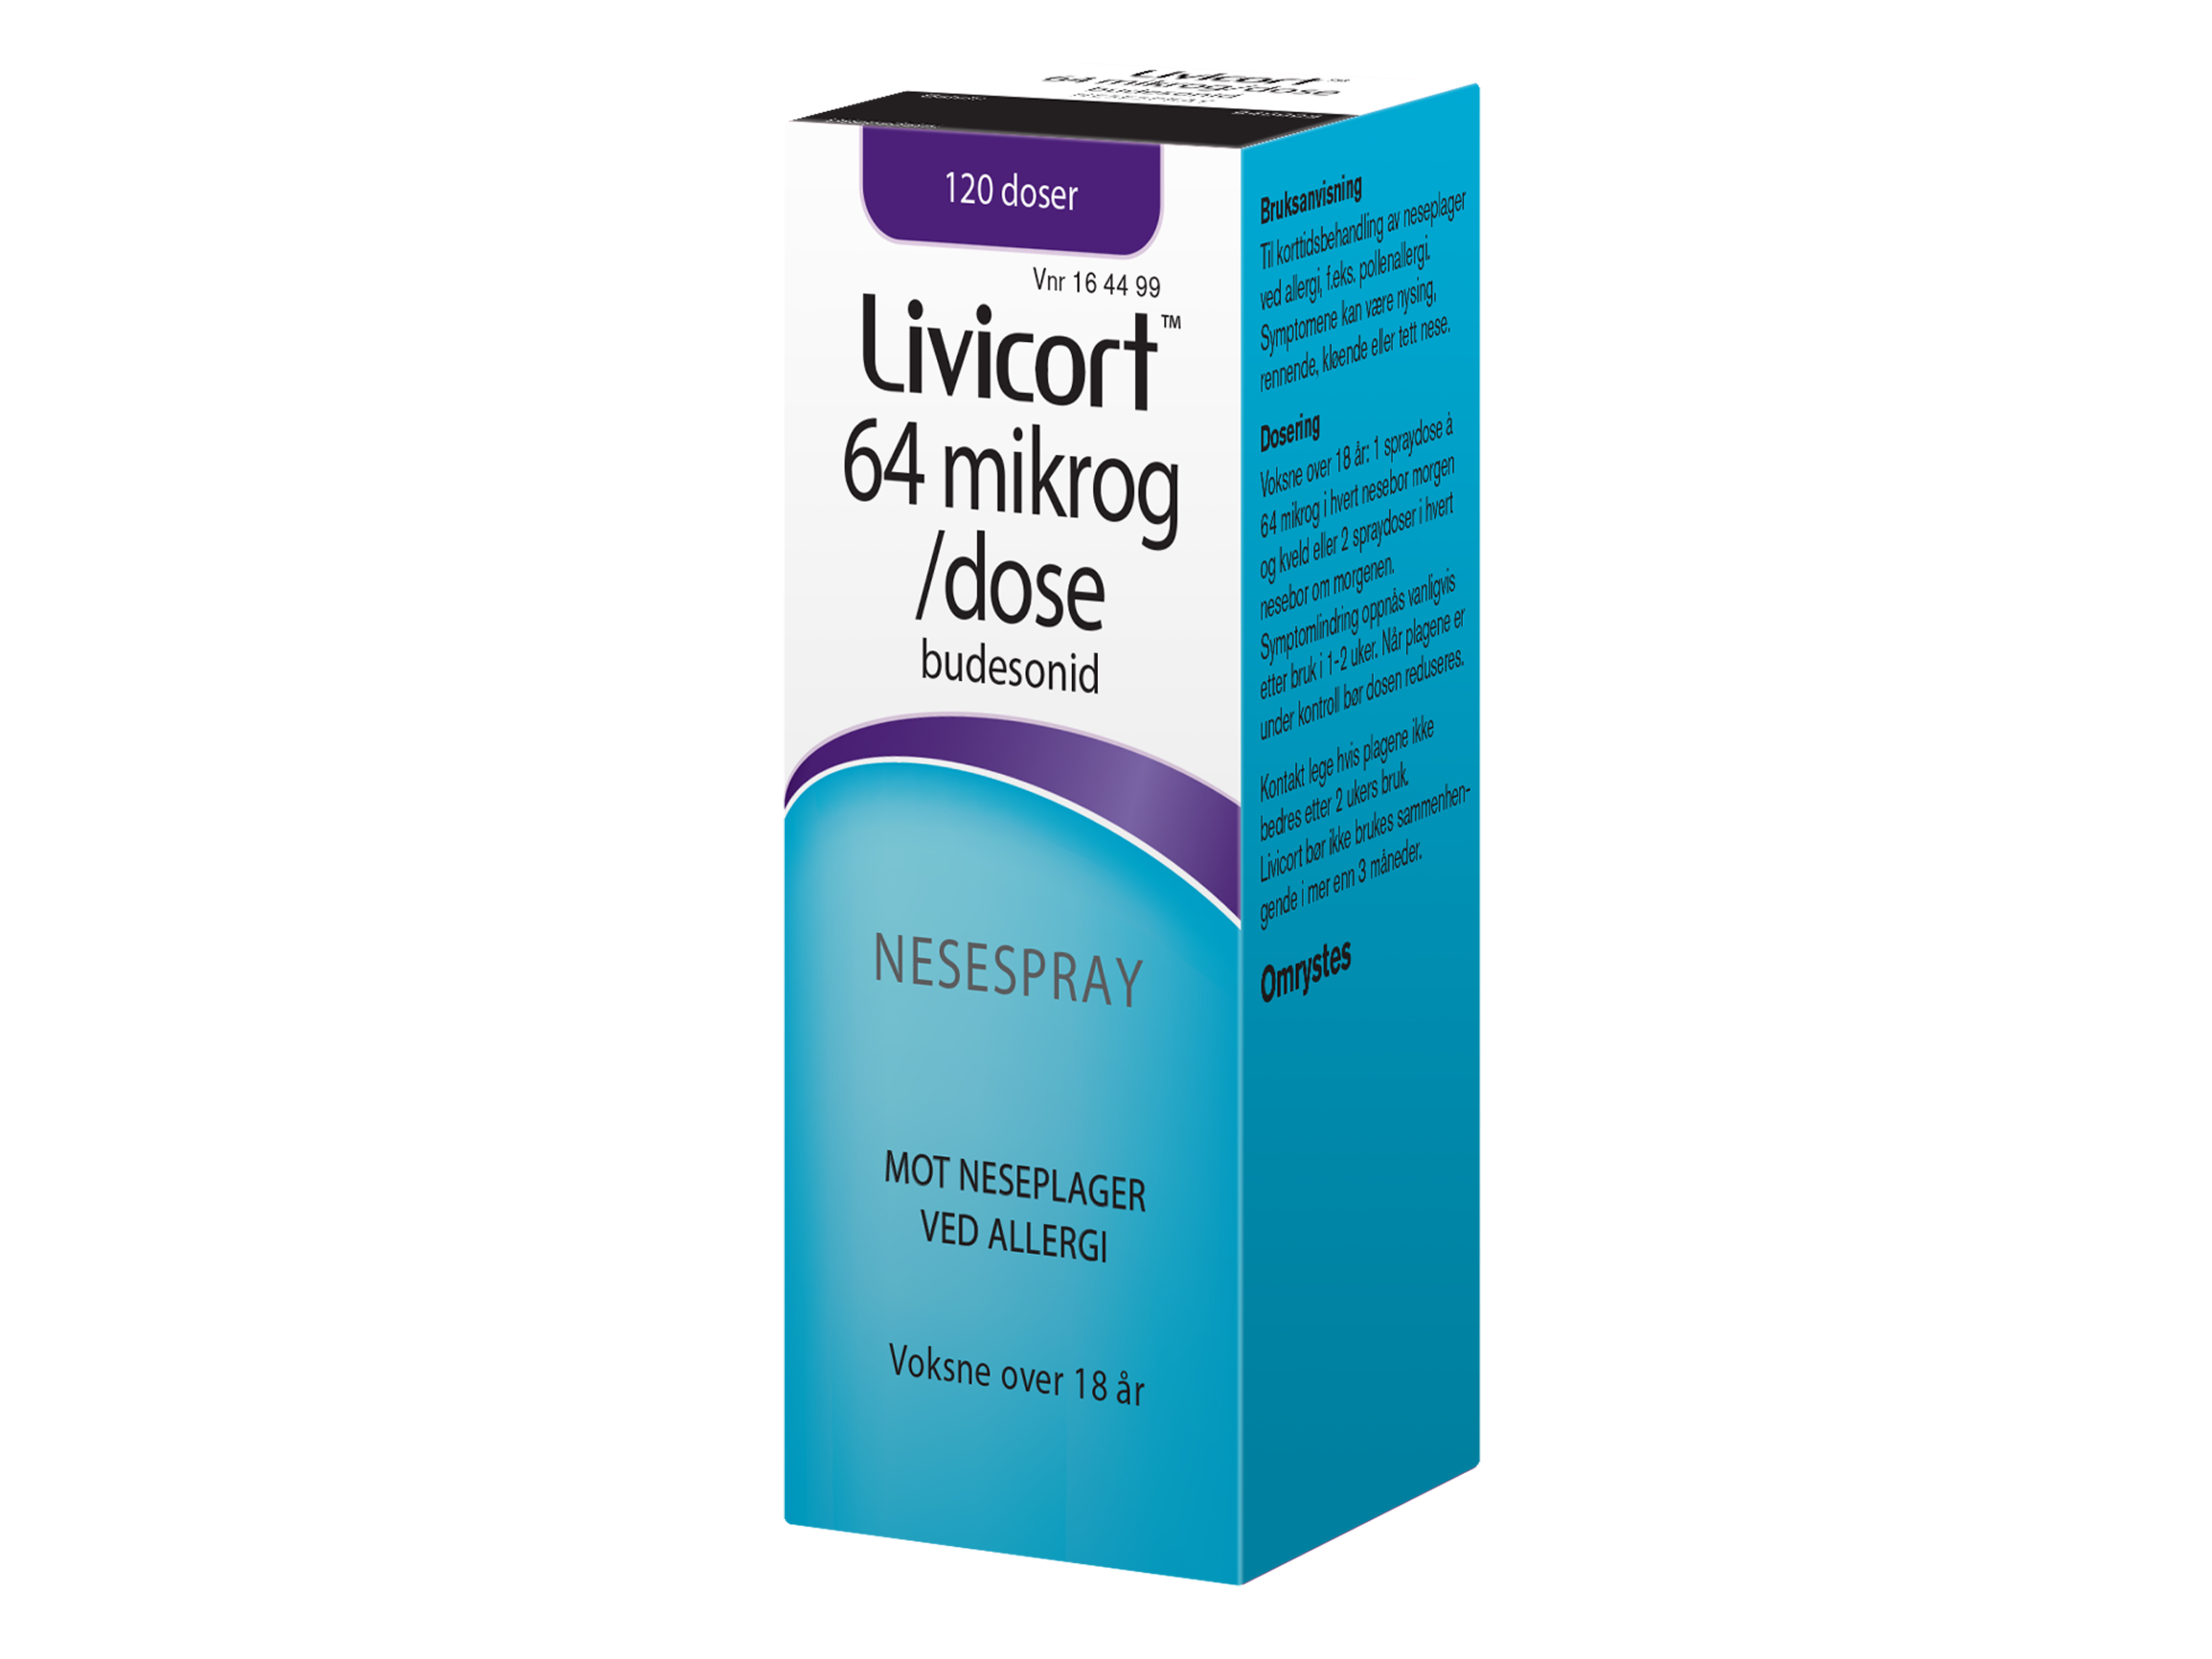 Livicort Nesespray, 64 μg/dose, 120 ml